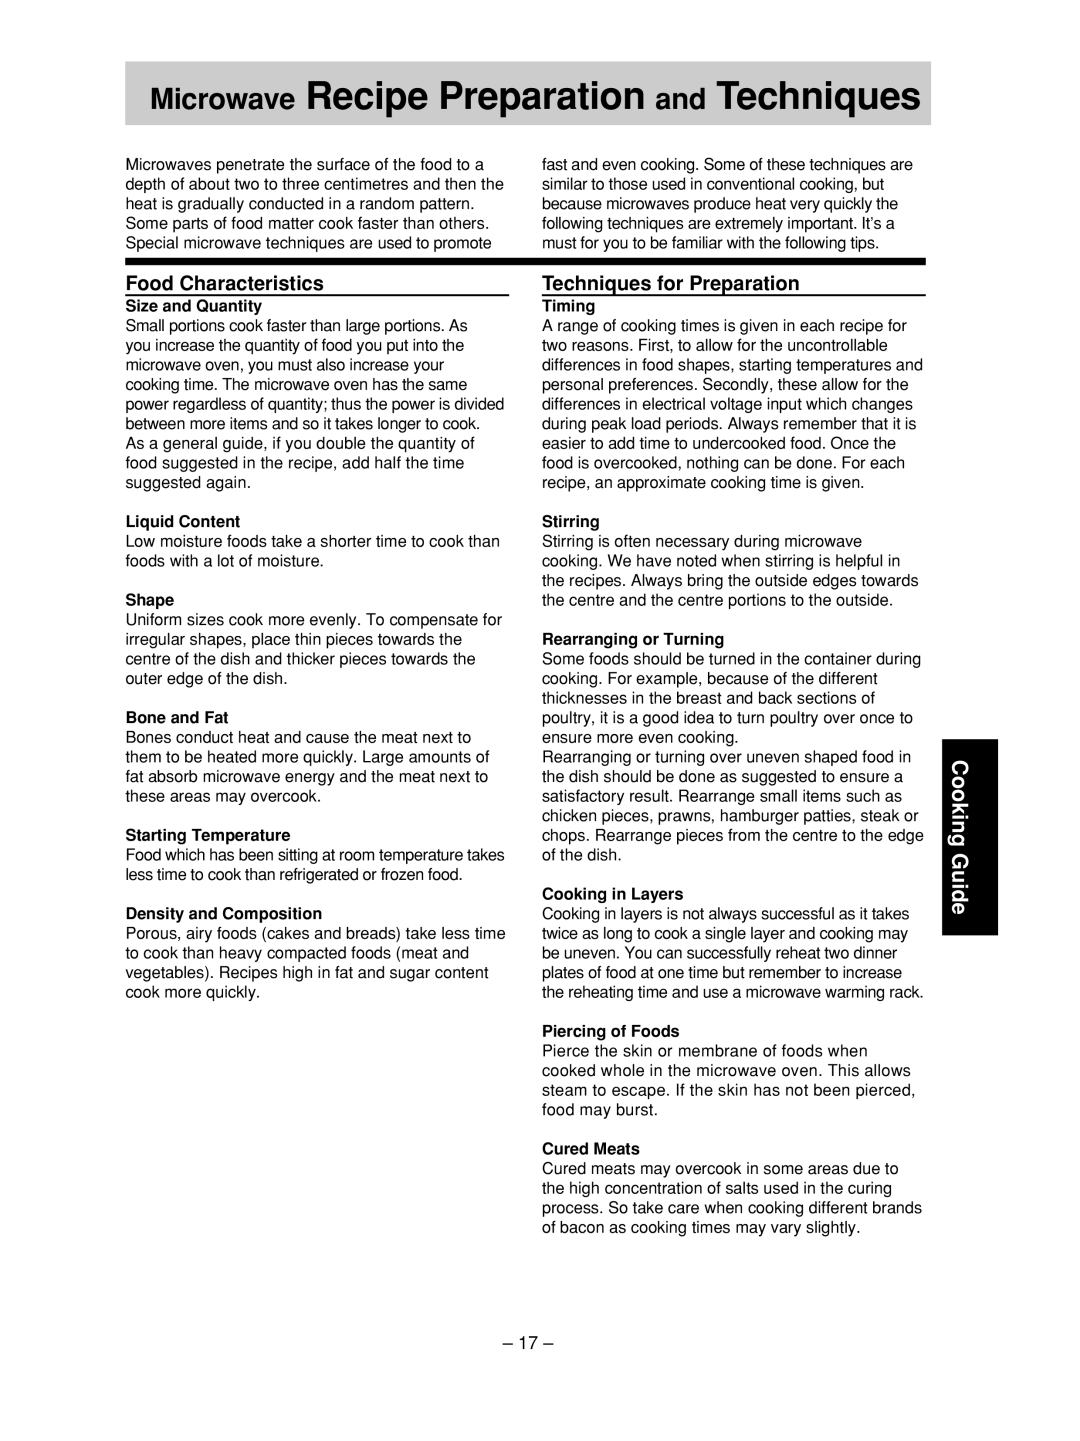 Panasonic NN-SD376S manual Food Characteristics, Techniques for Preparation 